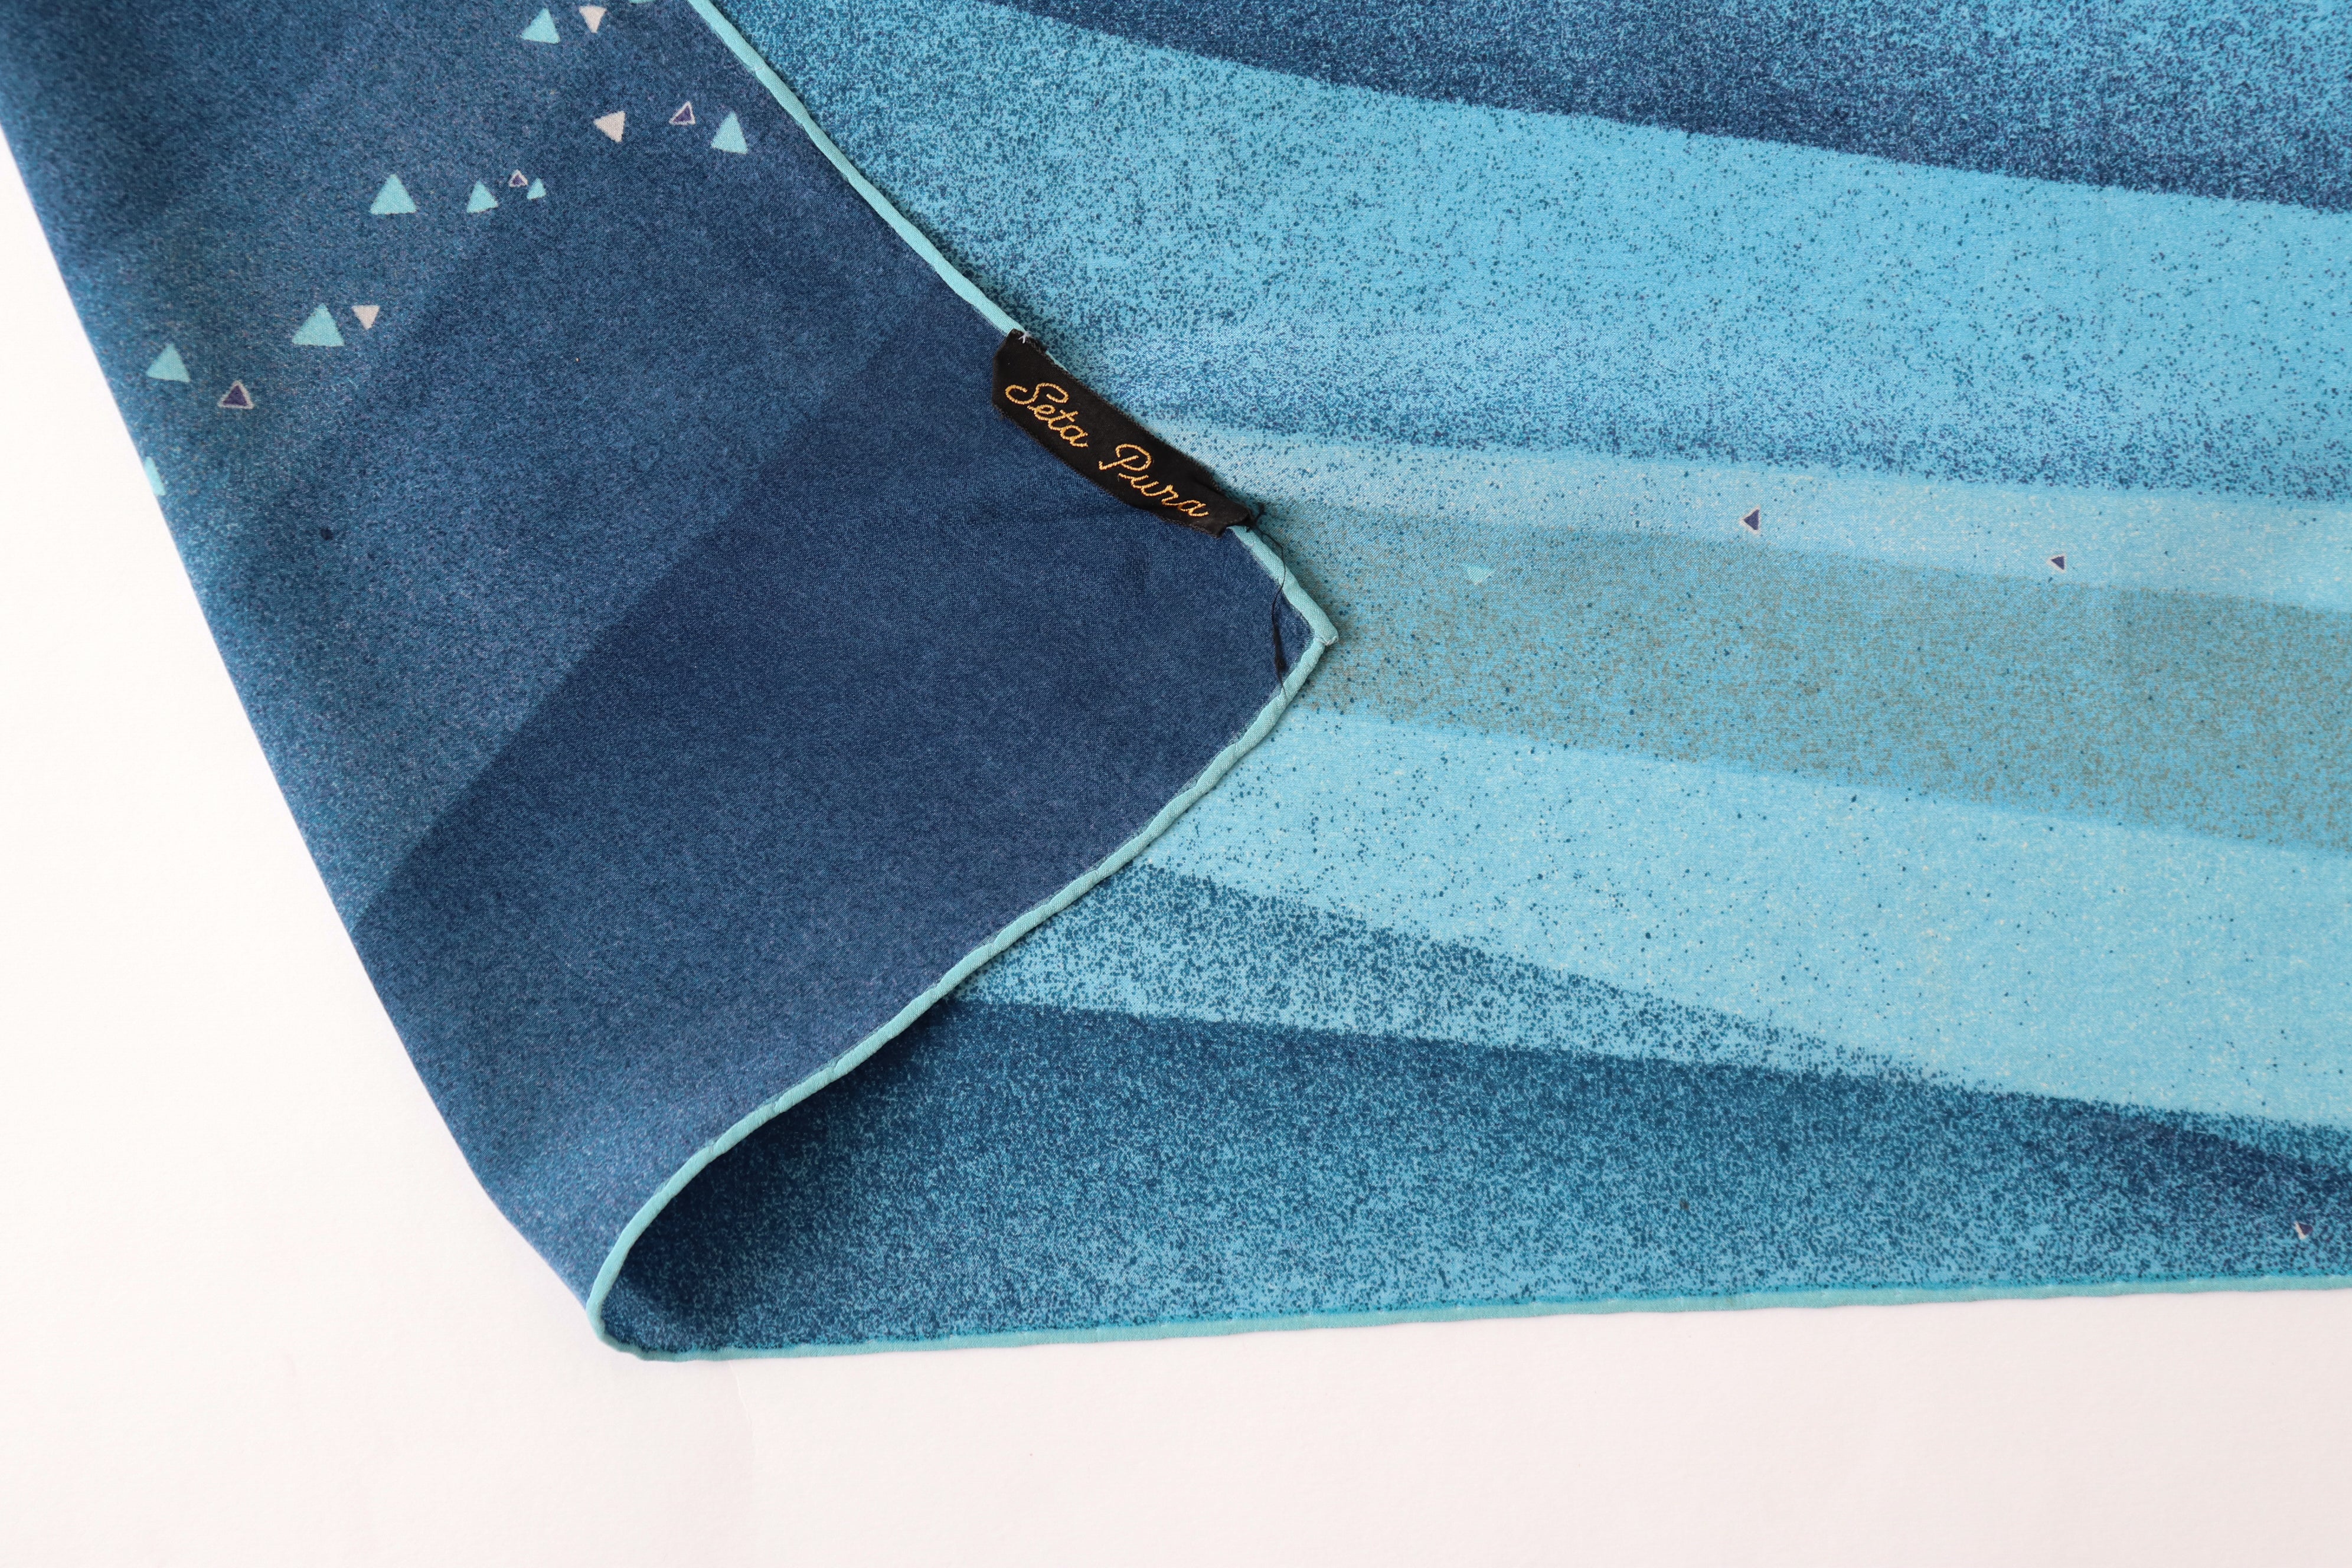 Jole Veneziana Vintage Silk Scarf - Blue Abstract Print - Large